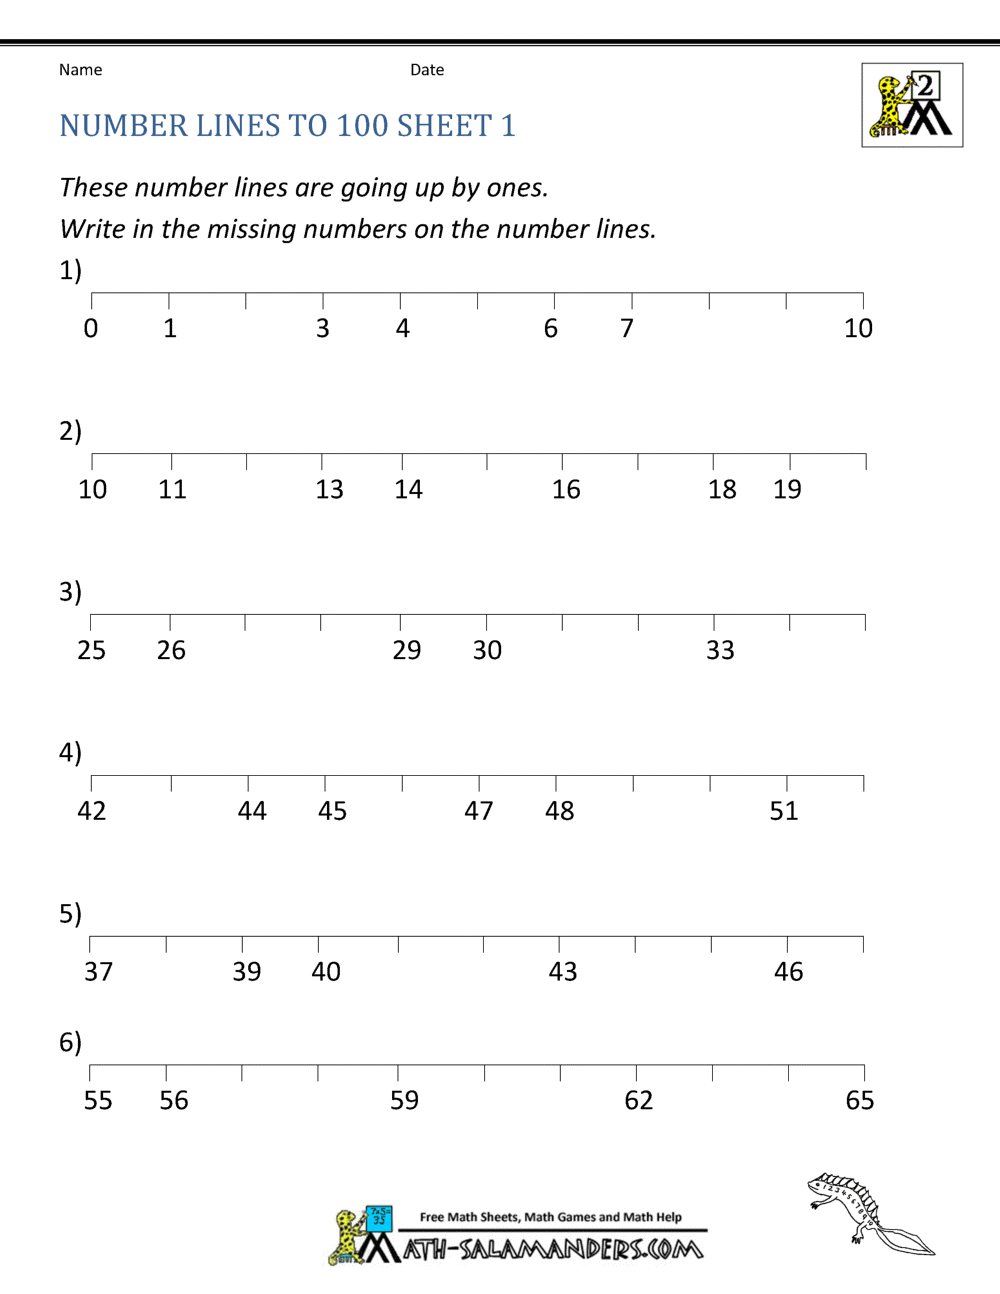 multiplication-using-number-line